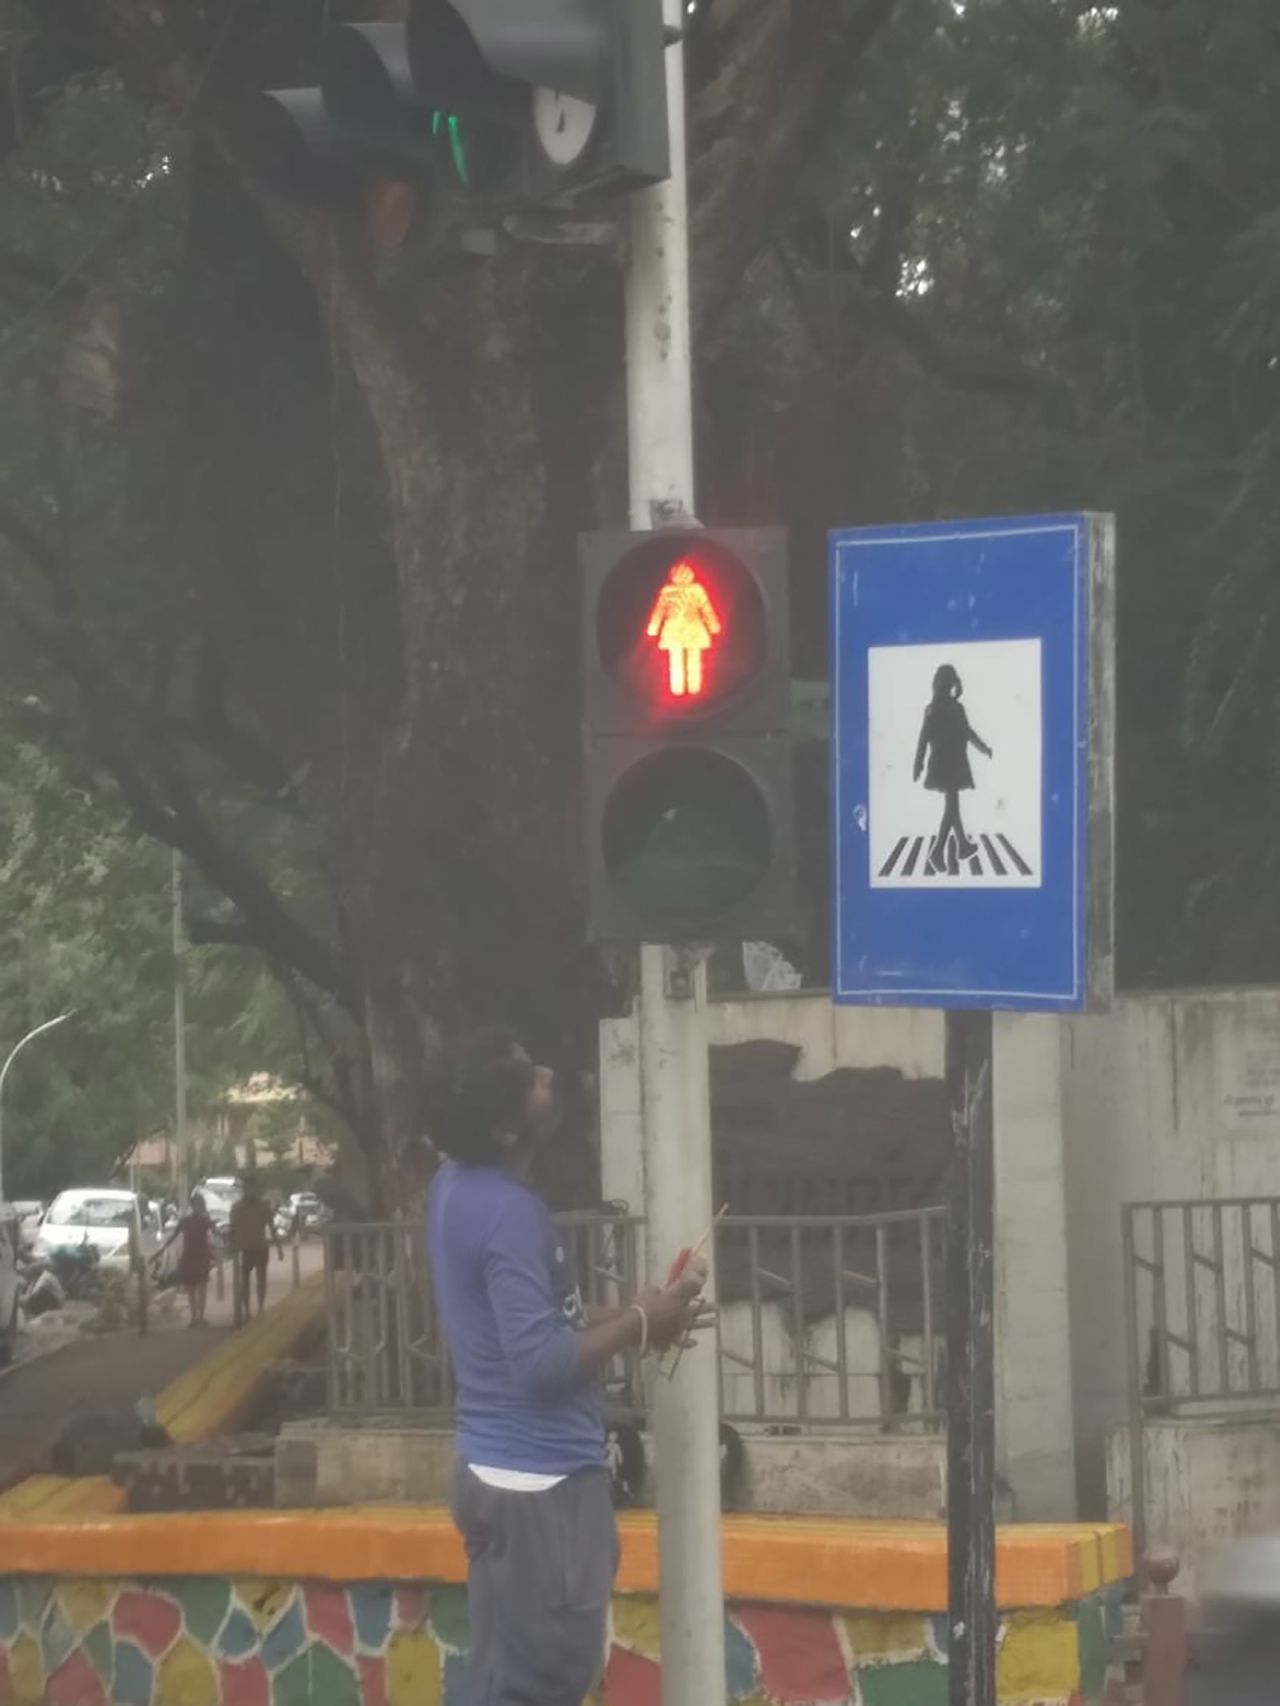 An image of the new crossings tweeted by Mumbai politician Aaditya Thackeray.